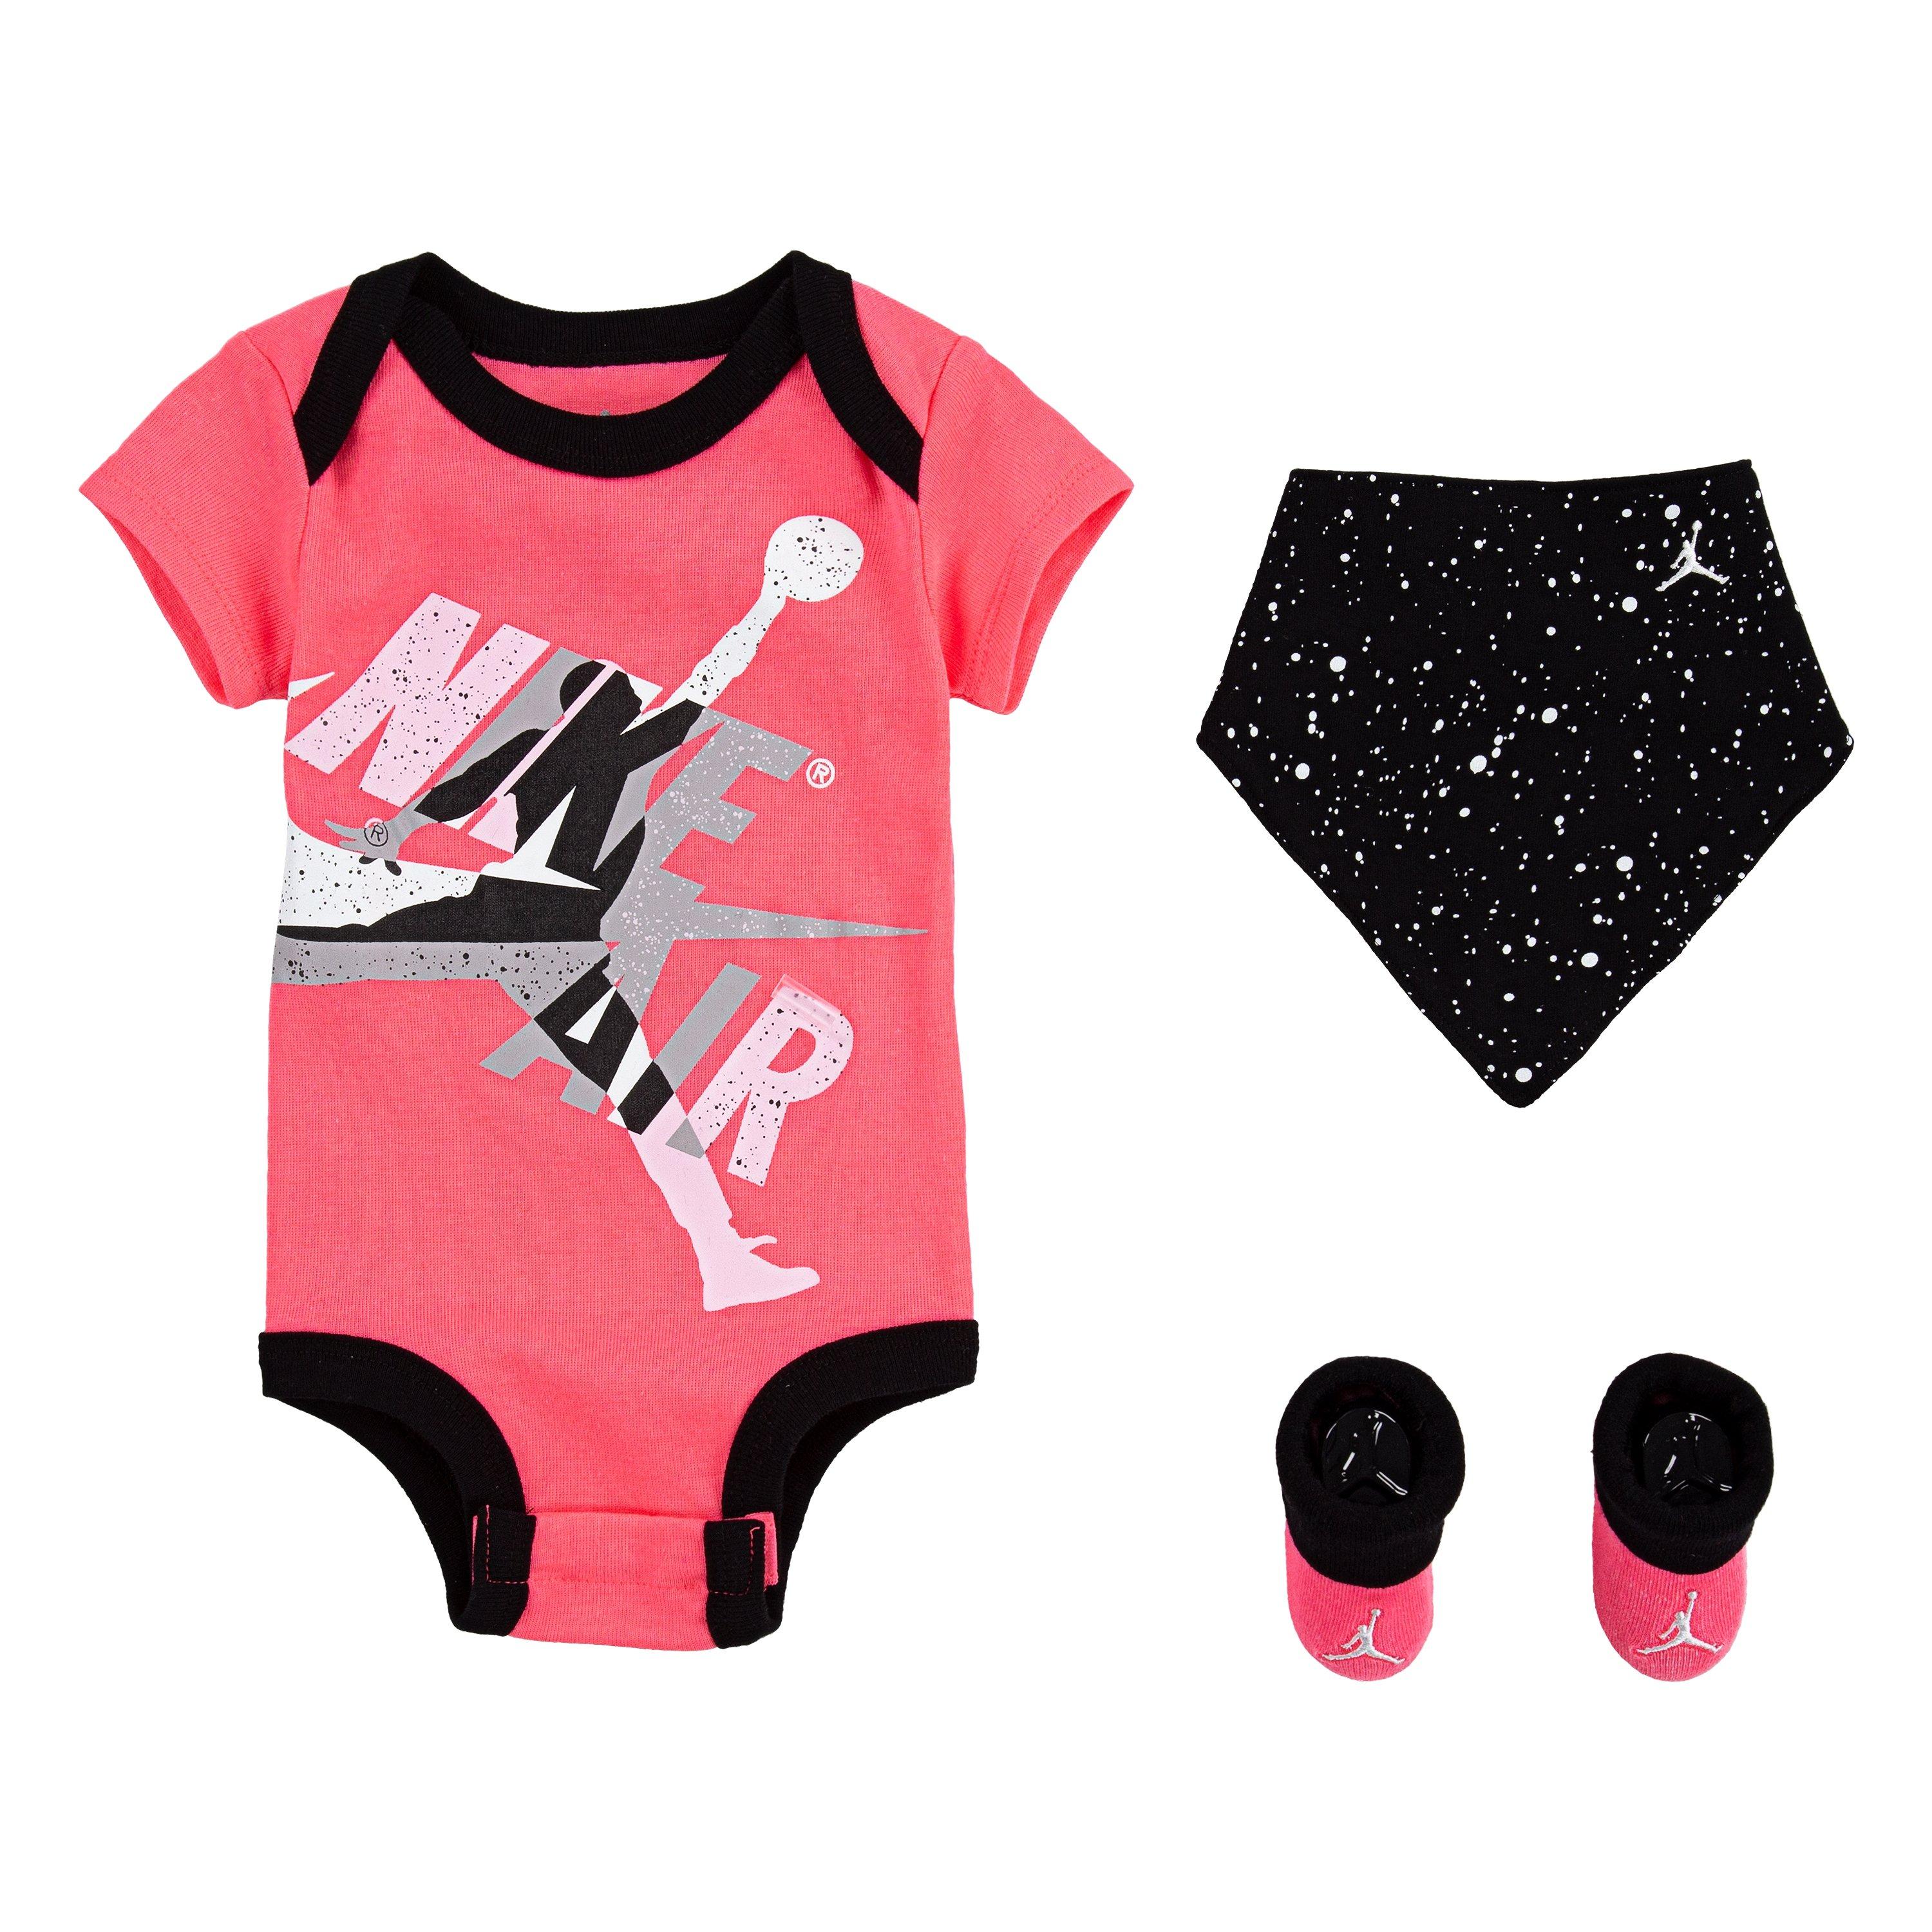 baby girl jordan outfits sets